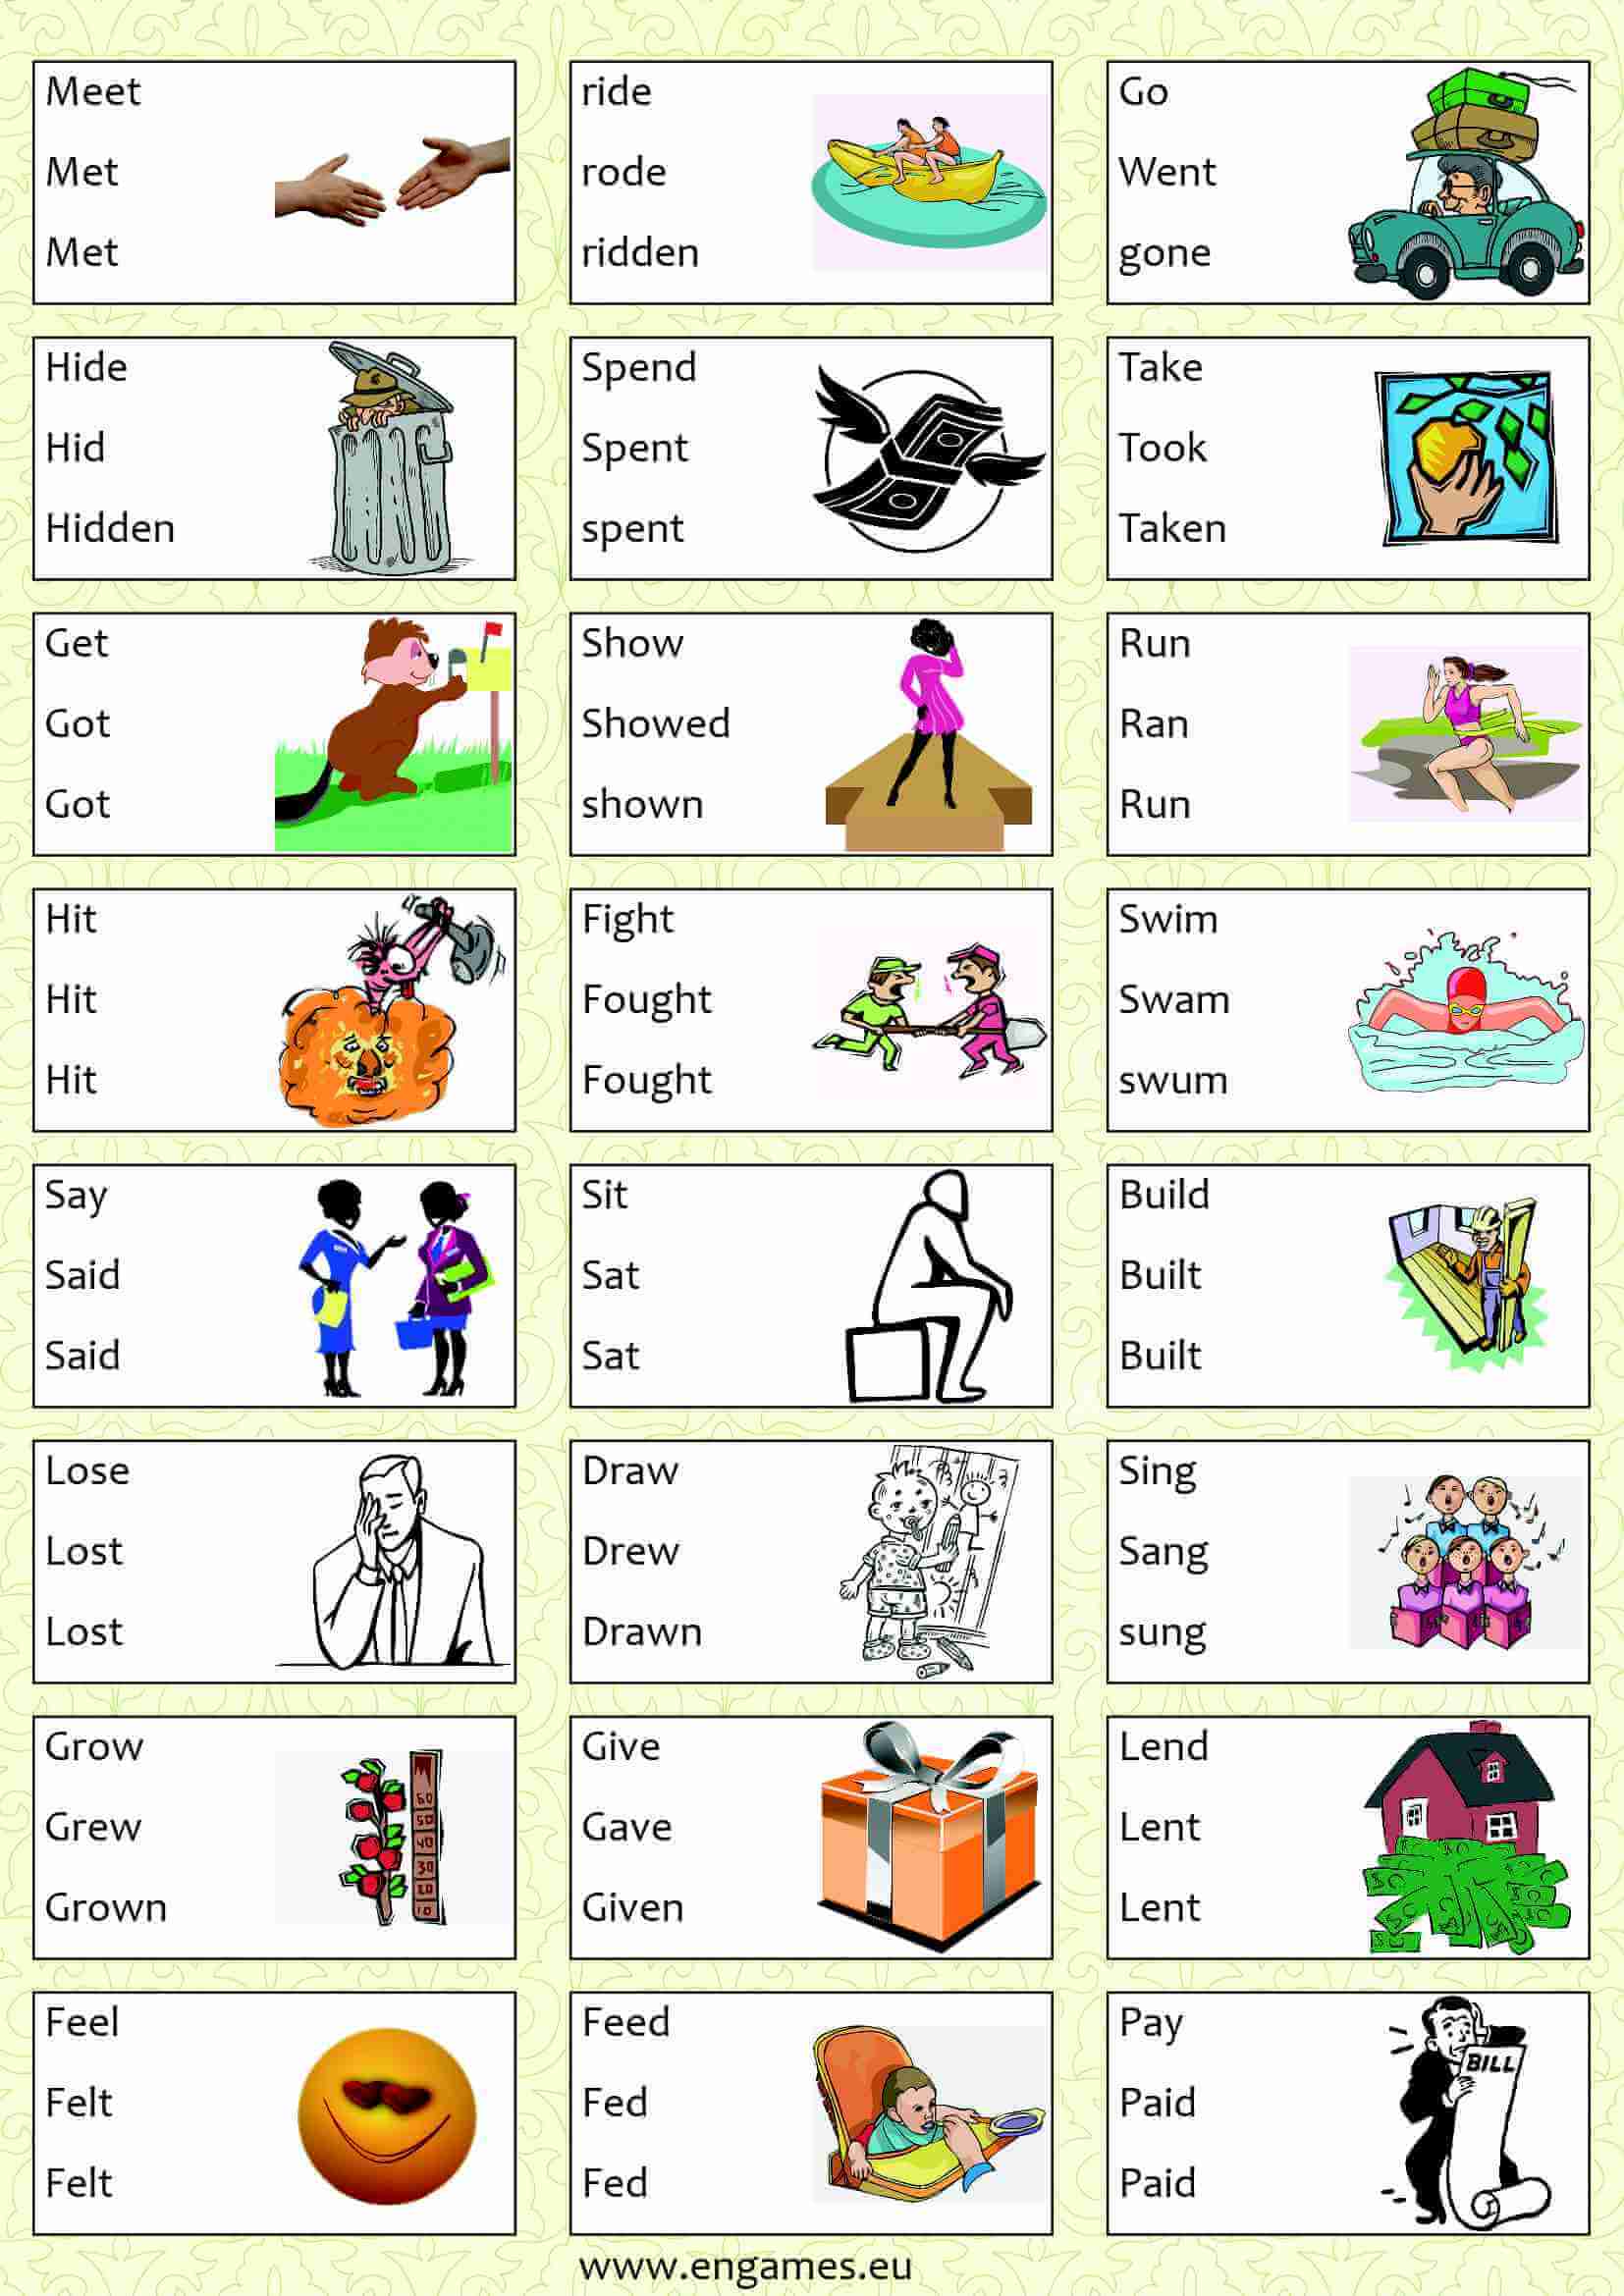 Grammar Games Irregular Verbs Games To Learn English Games To Learn English